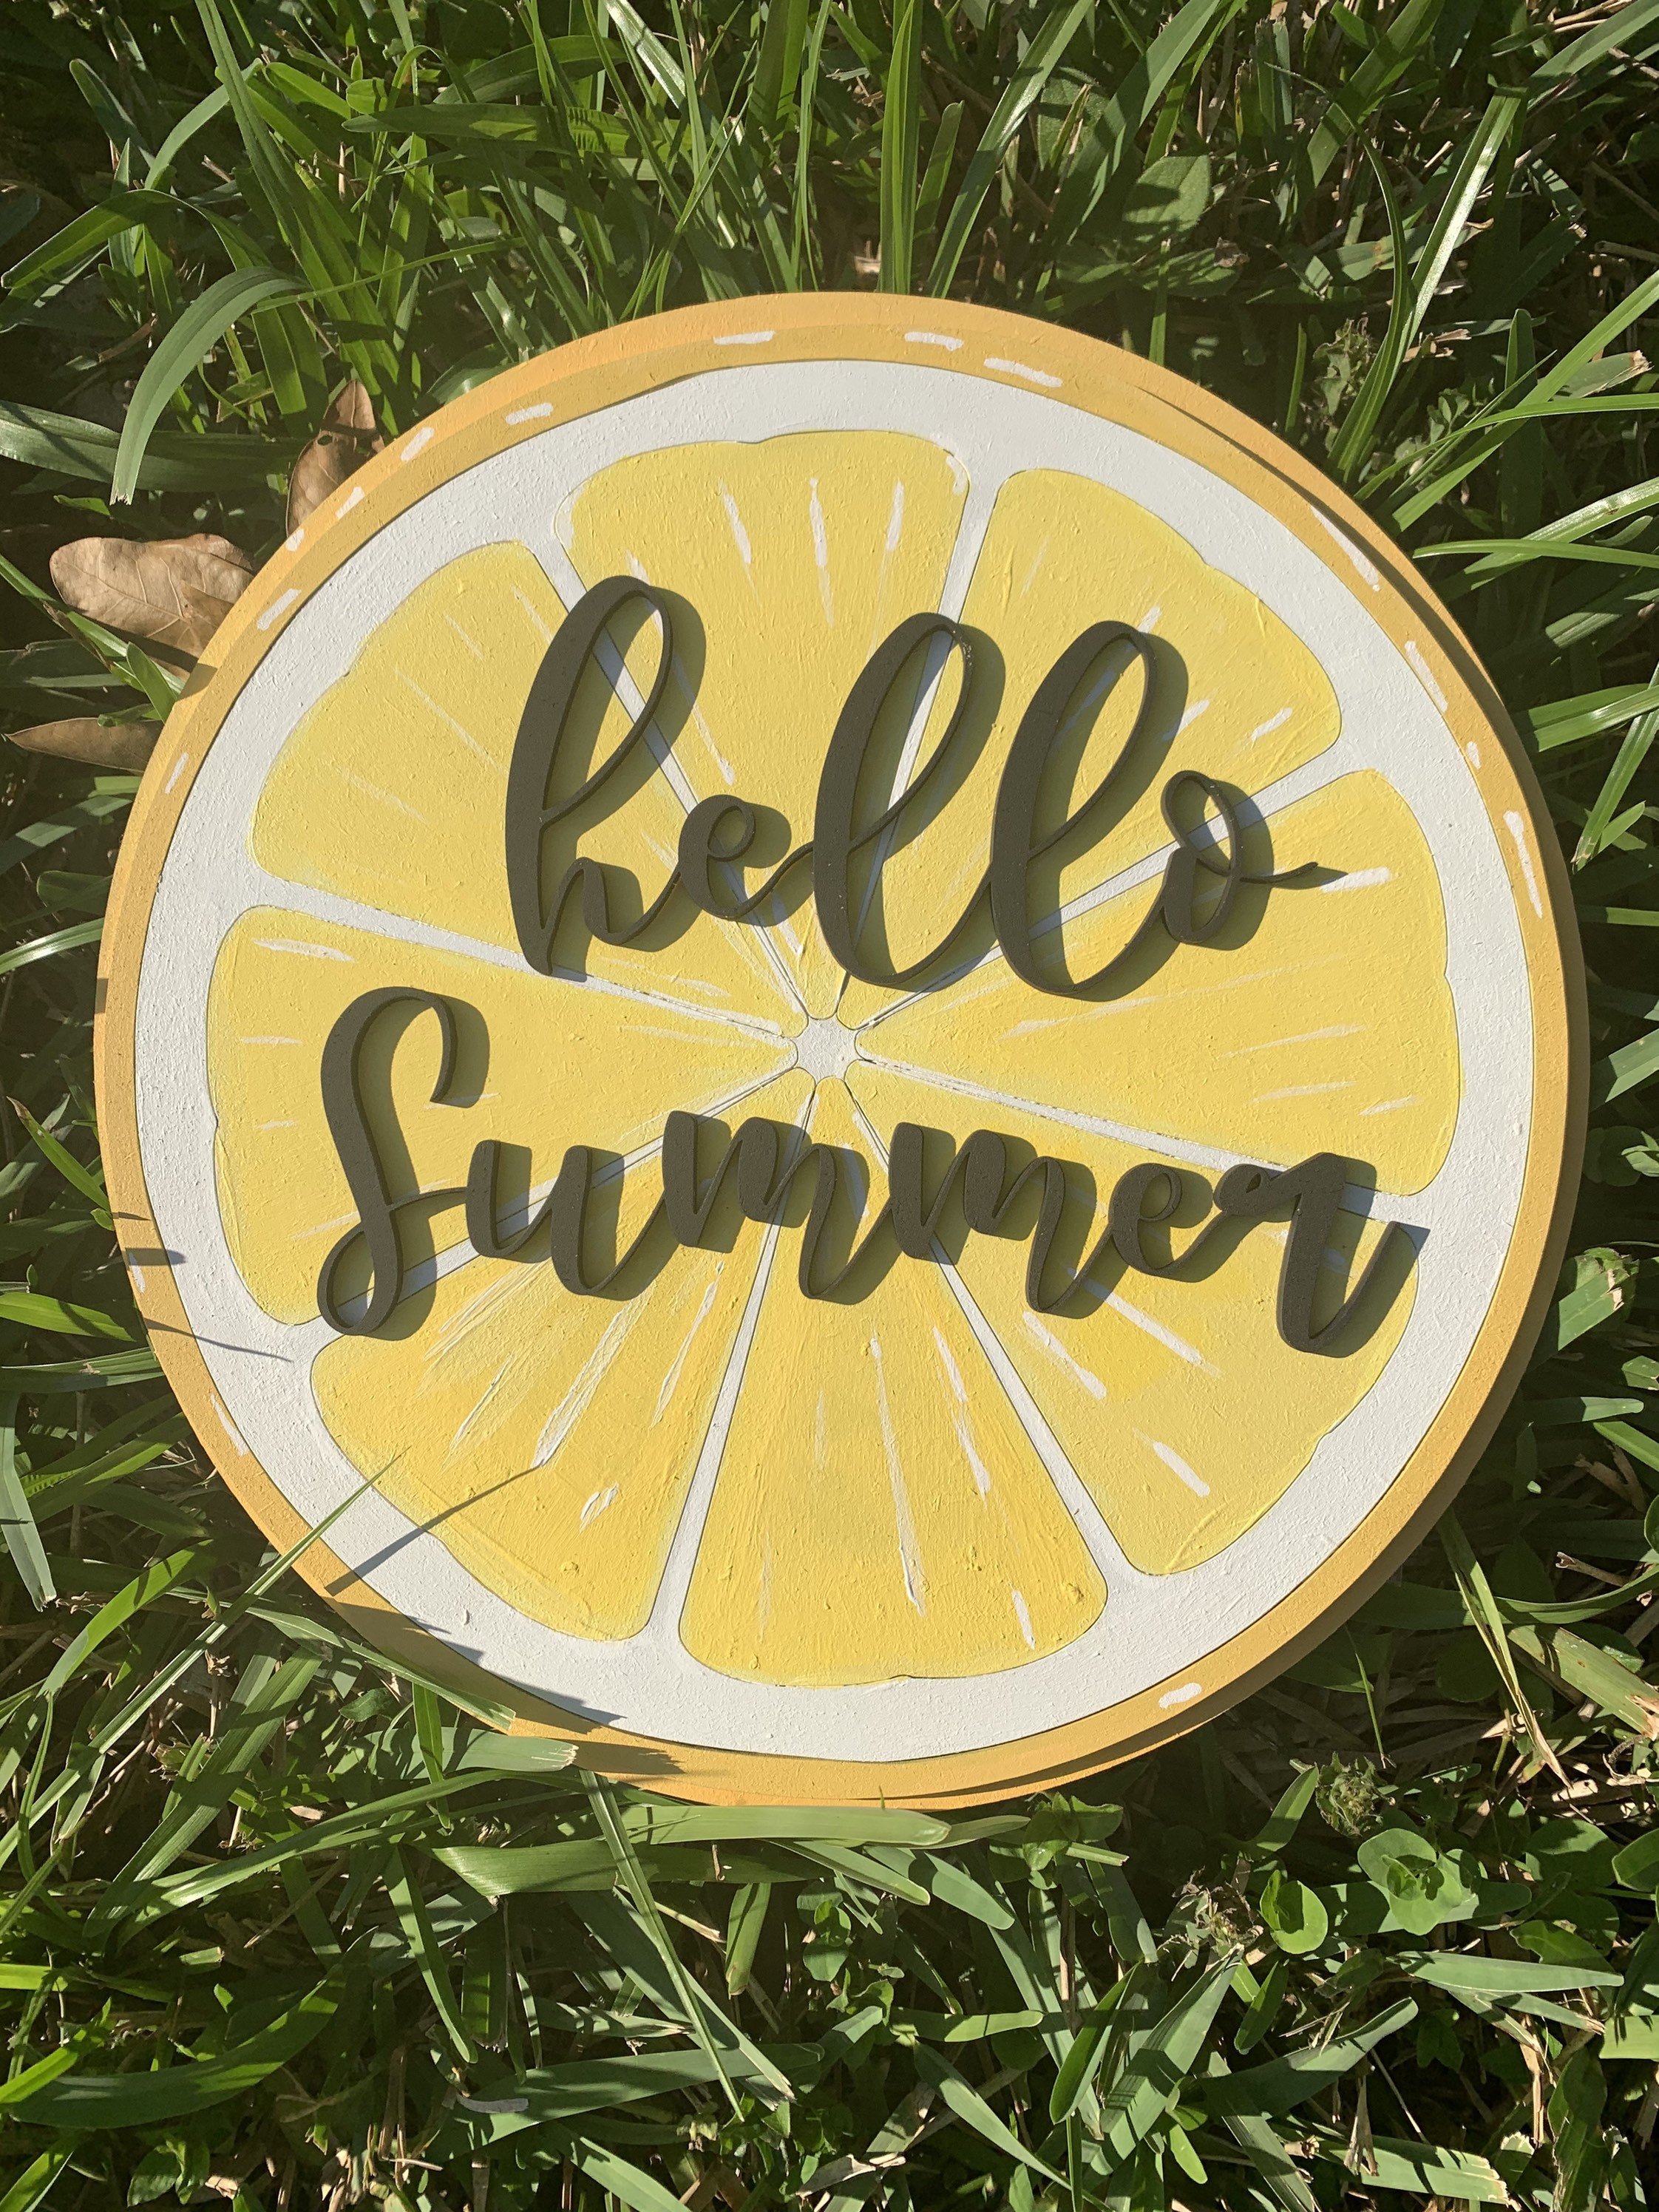 Lemon hello summer sign hello summer summer time wall decor | Etsy